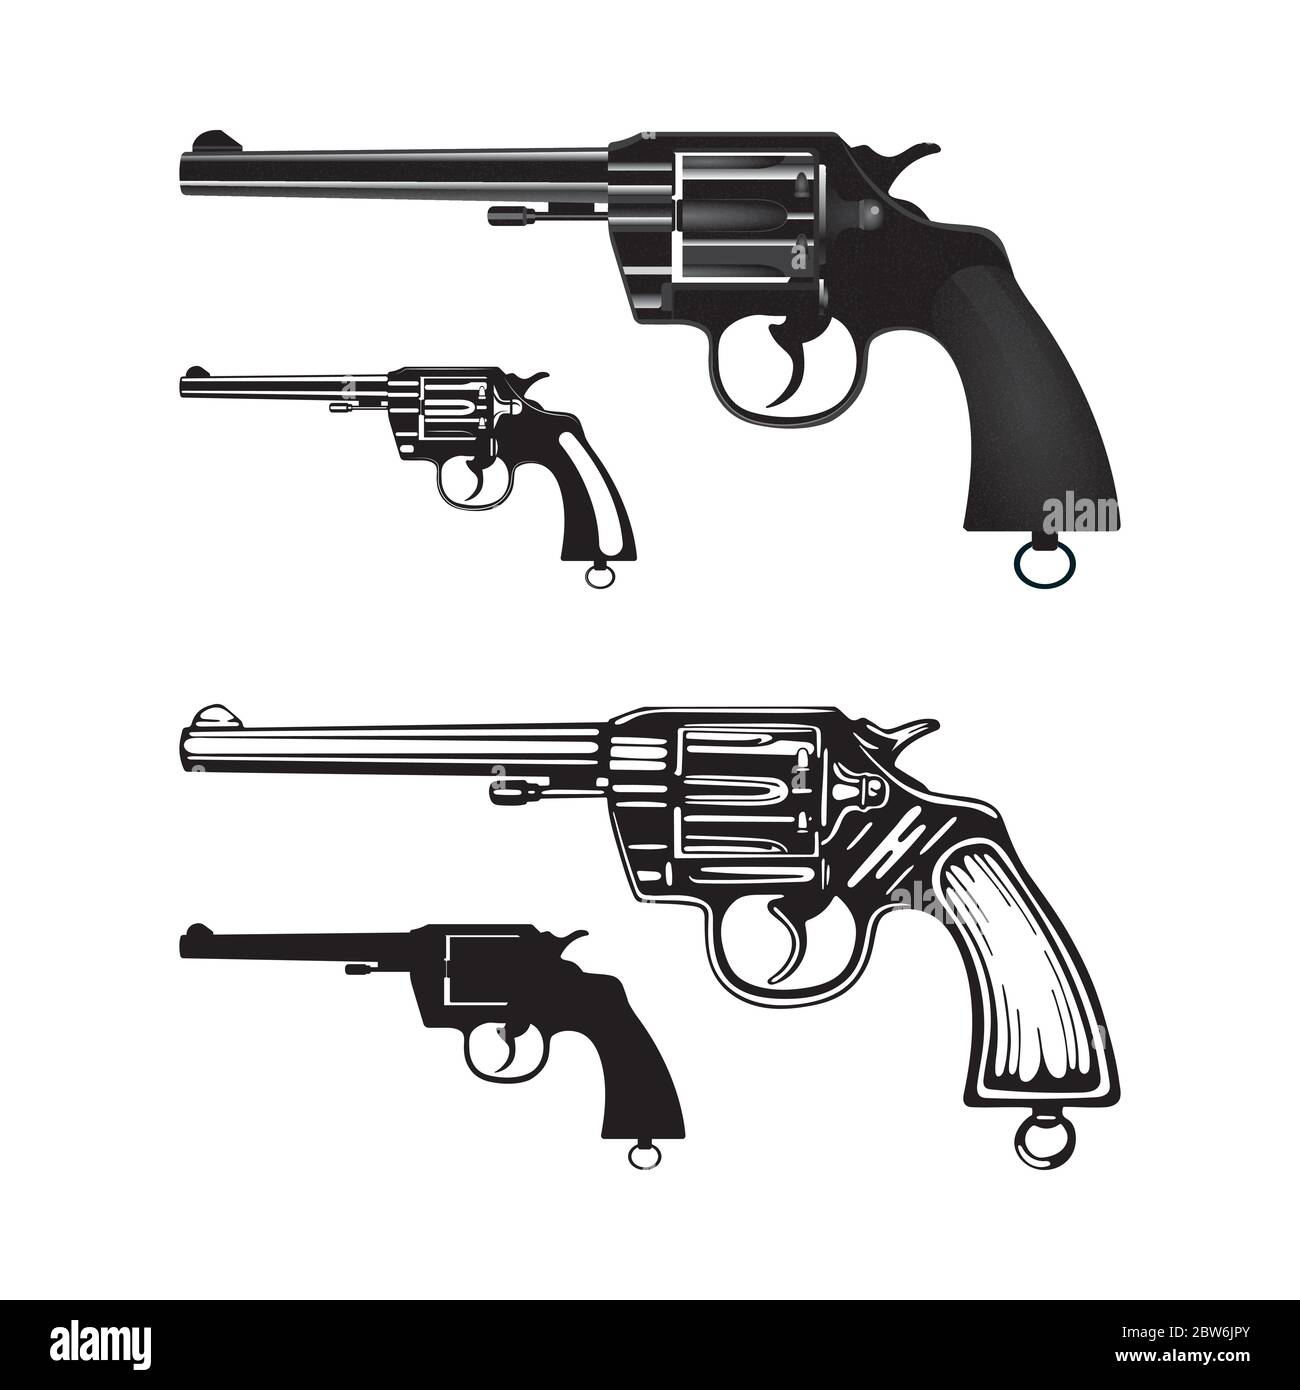 Download Handgun Firearm Pistol RoyaltyFree Vector Graphic  Pixabay